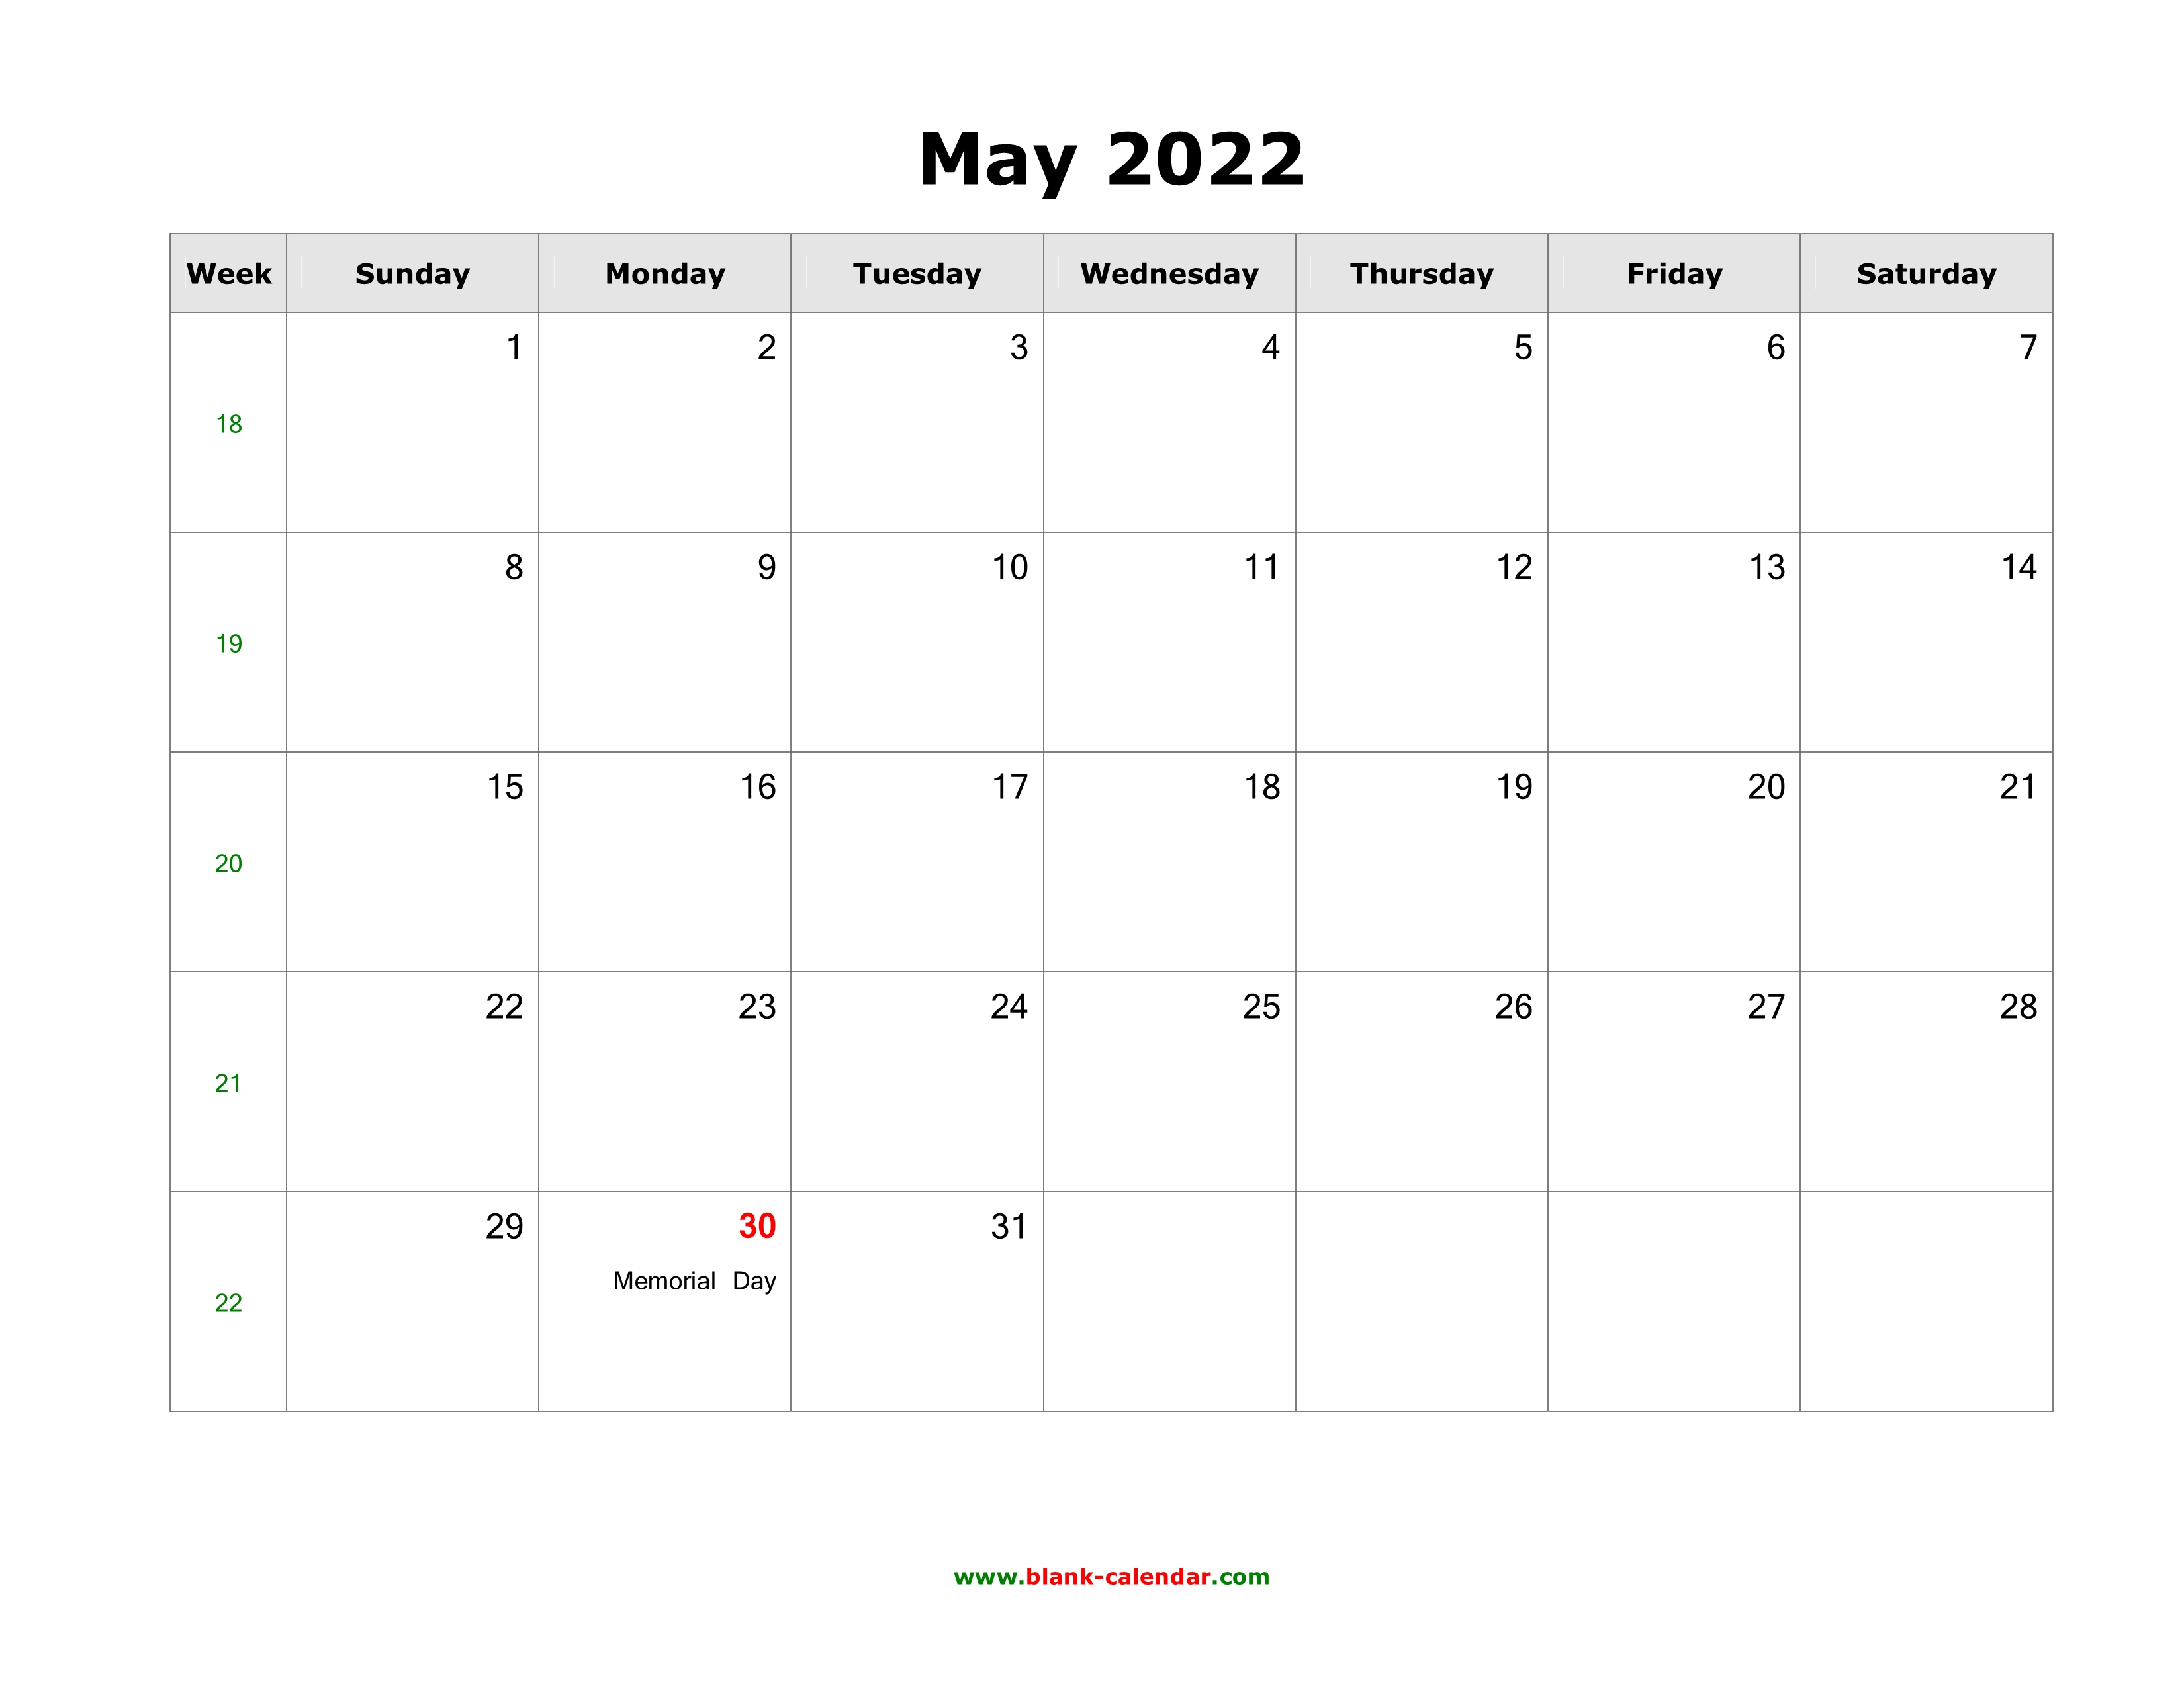 May 2022 Blank Calendar Free Download Calendar Templates